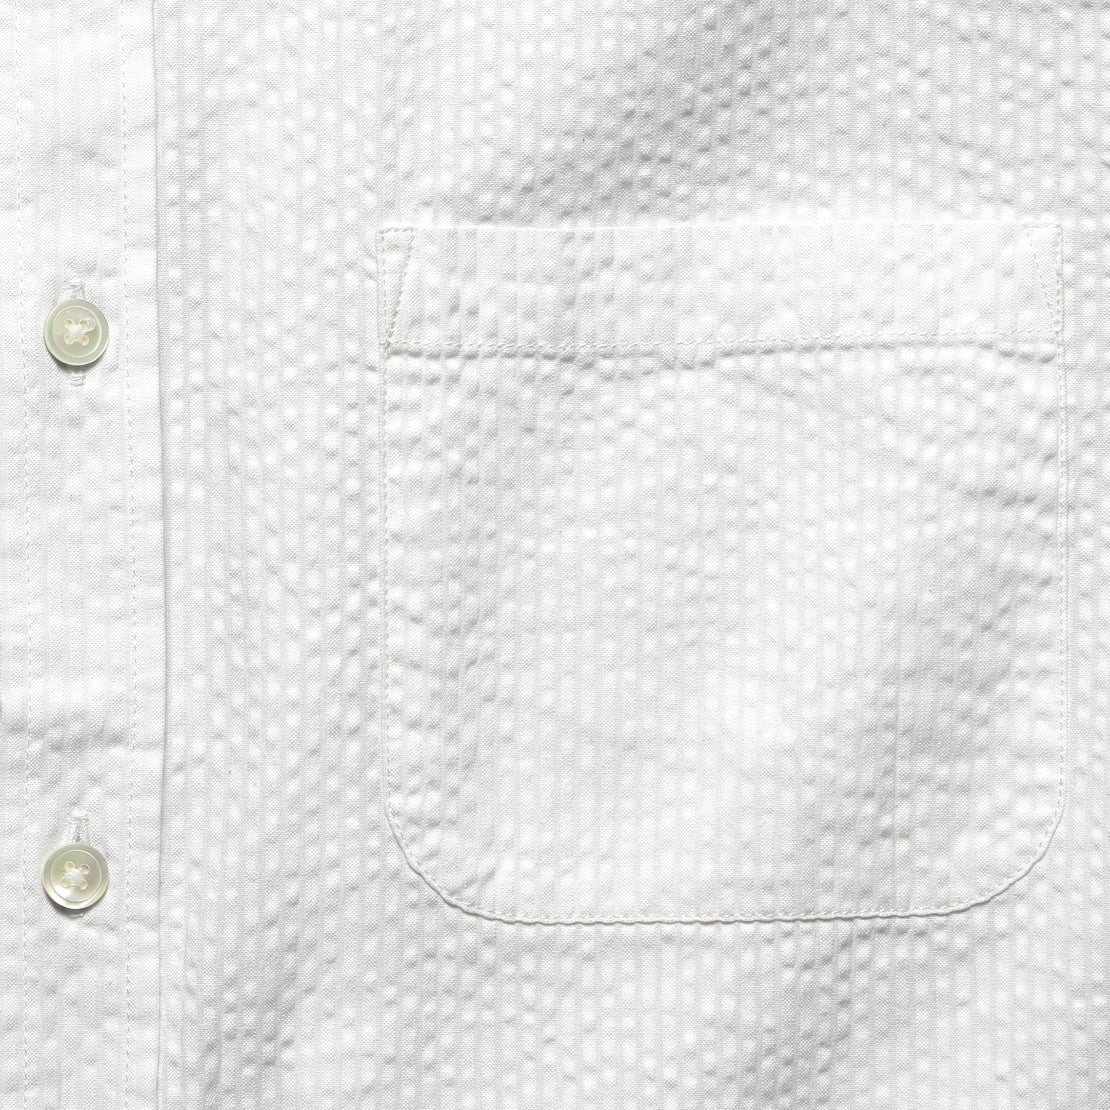 Atlantico Seersucker Shirt - White - Portuguese Flannel - STAG Provisions - Tops - S/S Woven - Seersucker